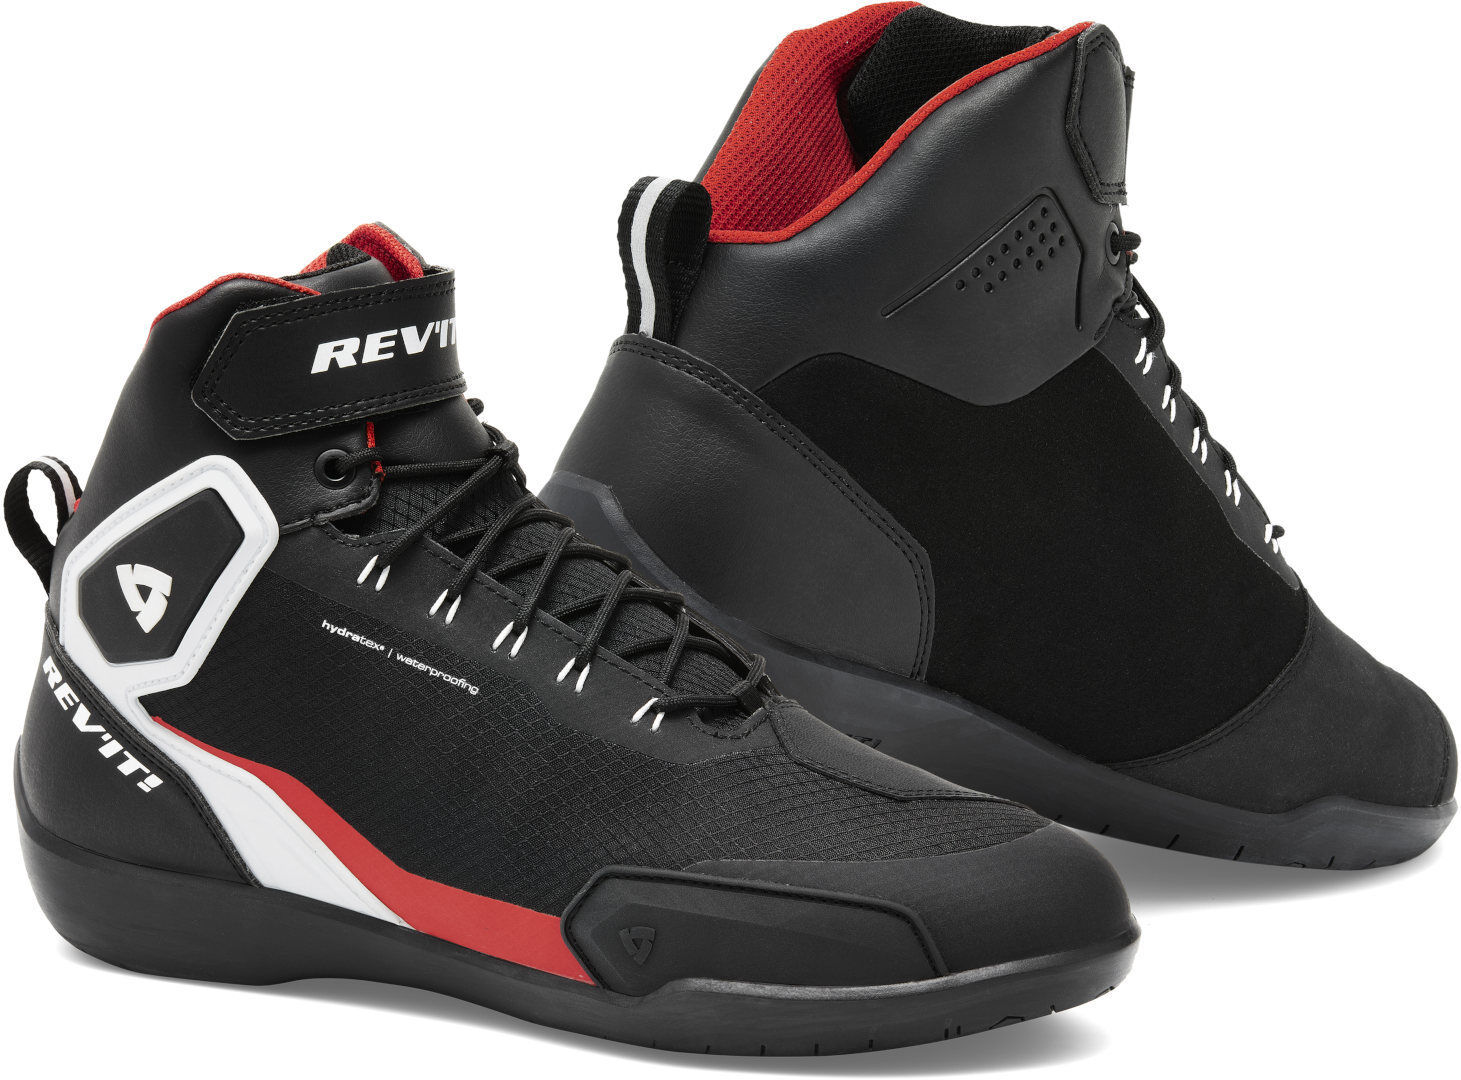 Revit G-Force H2O Zapatos impermeables para motocicletas - Negro Blanco Rojo (42)